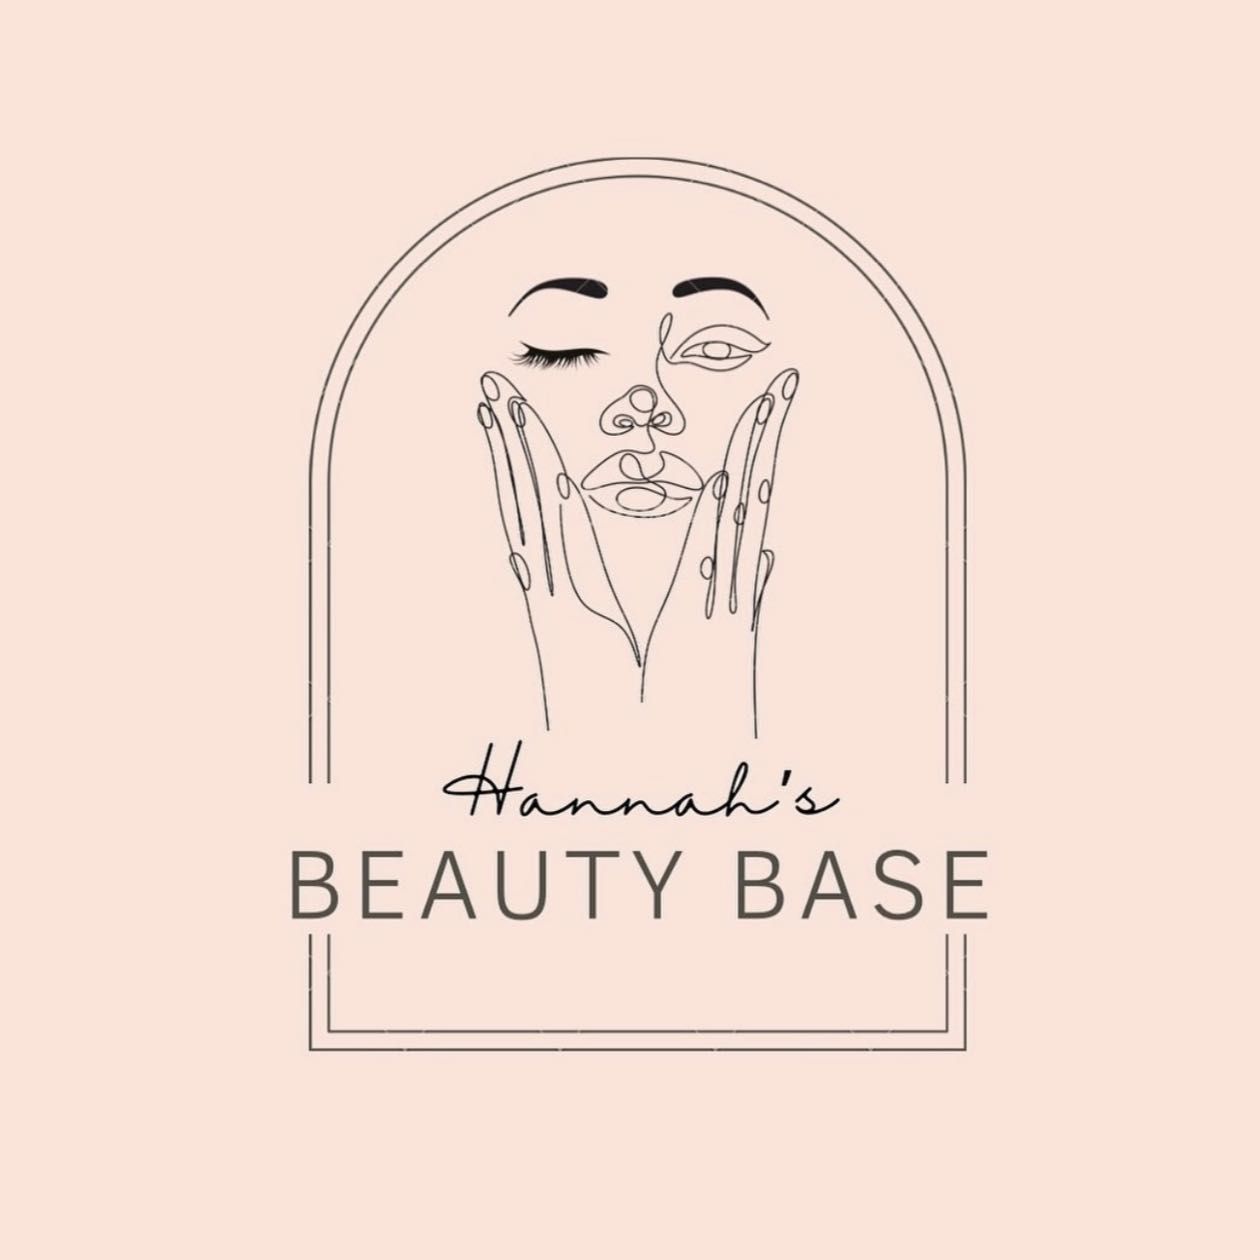 Hannah’s Beauty Base, Ynysowen Fach, Aberfan, Merthyr Tydfil